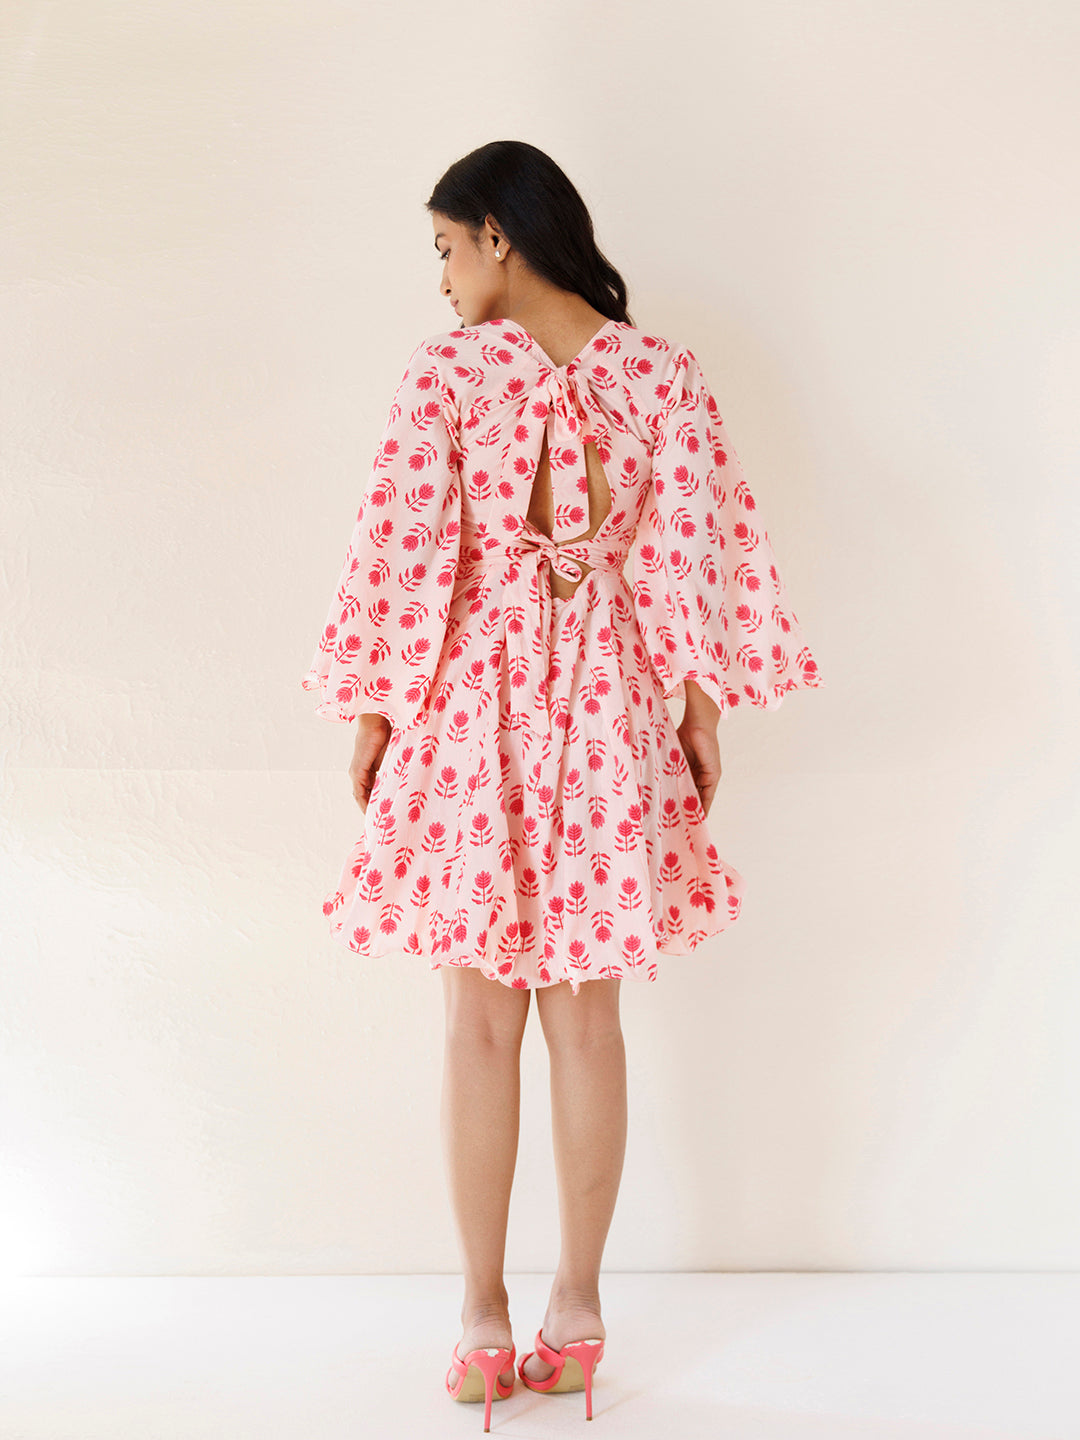 Calla Lily Pink Cotton Printed Dress by ragavi